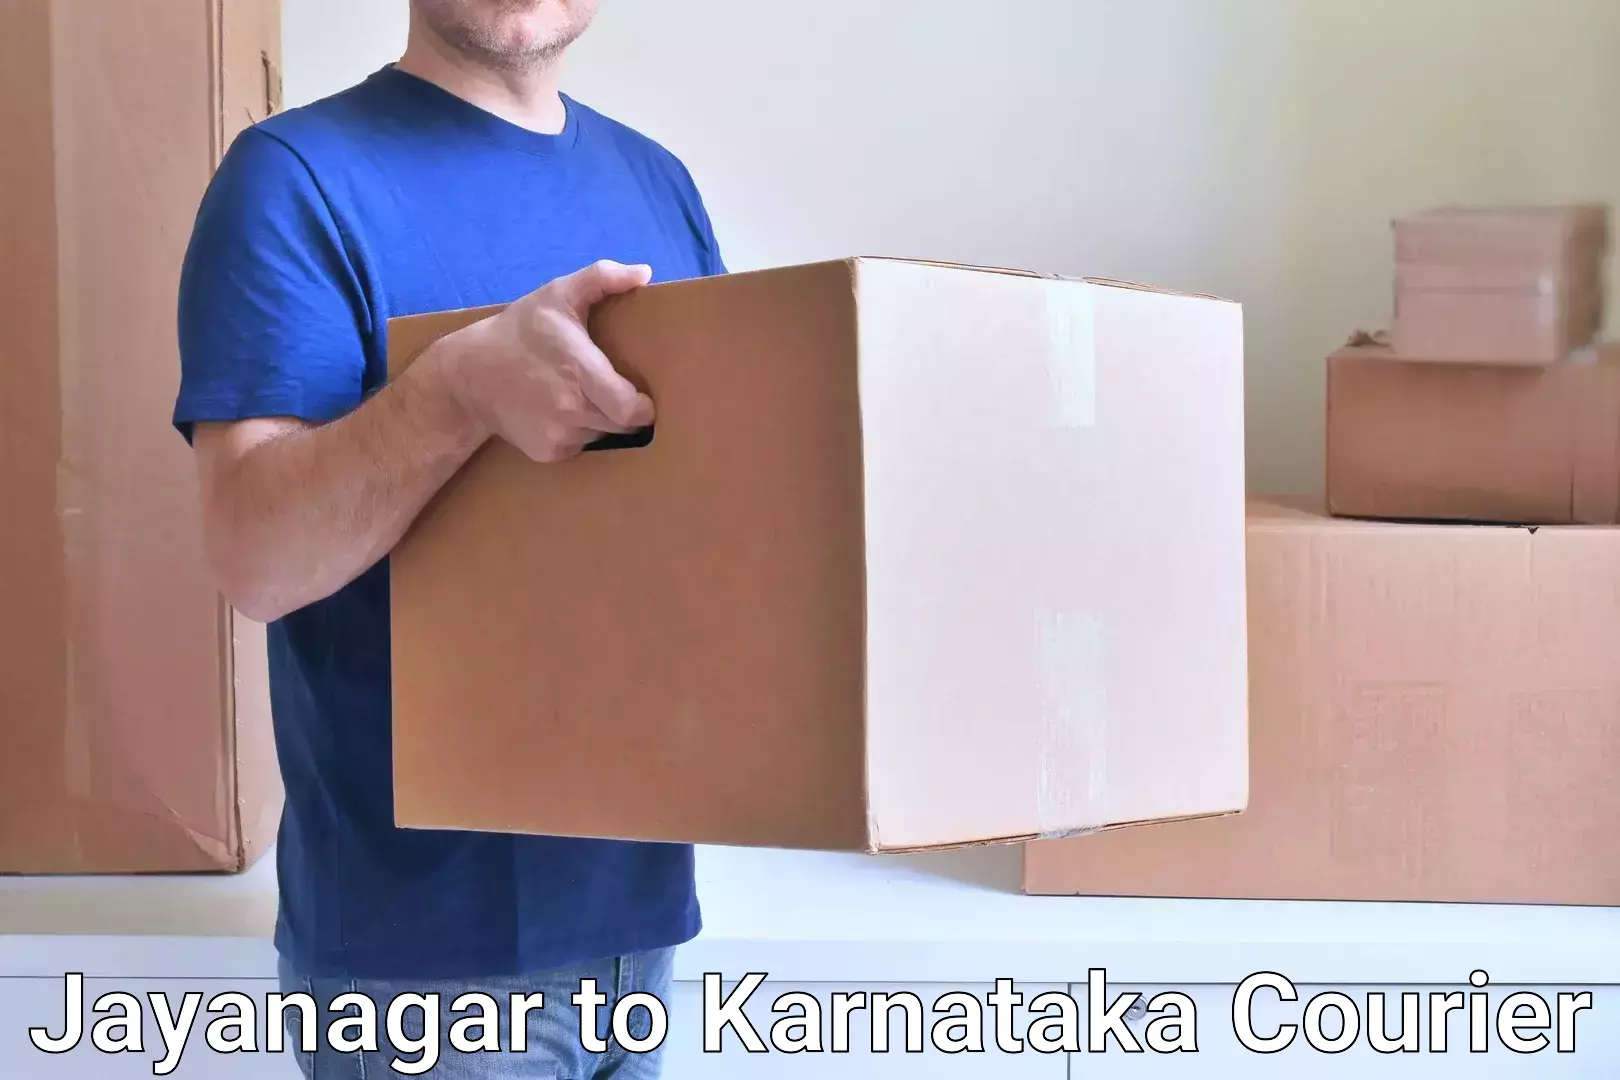 Global logistics network Jayanagar to Kodagu